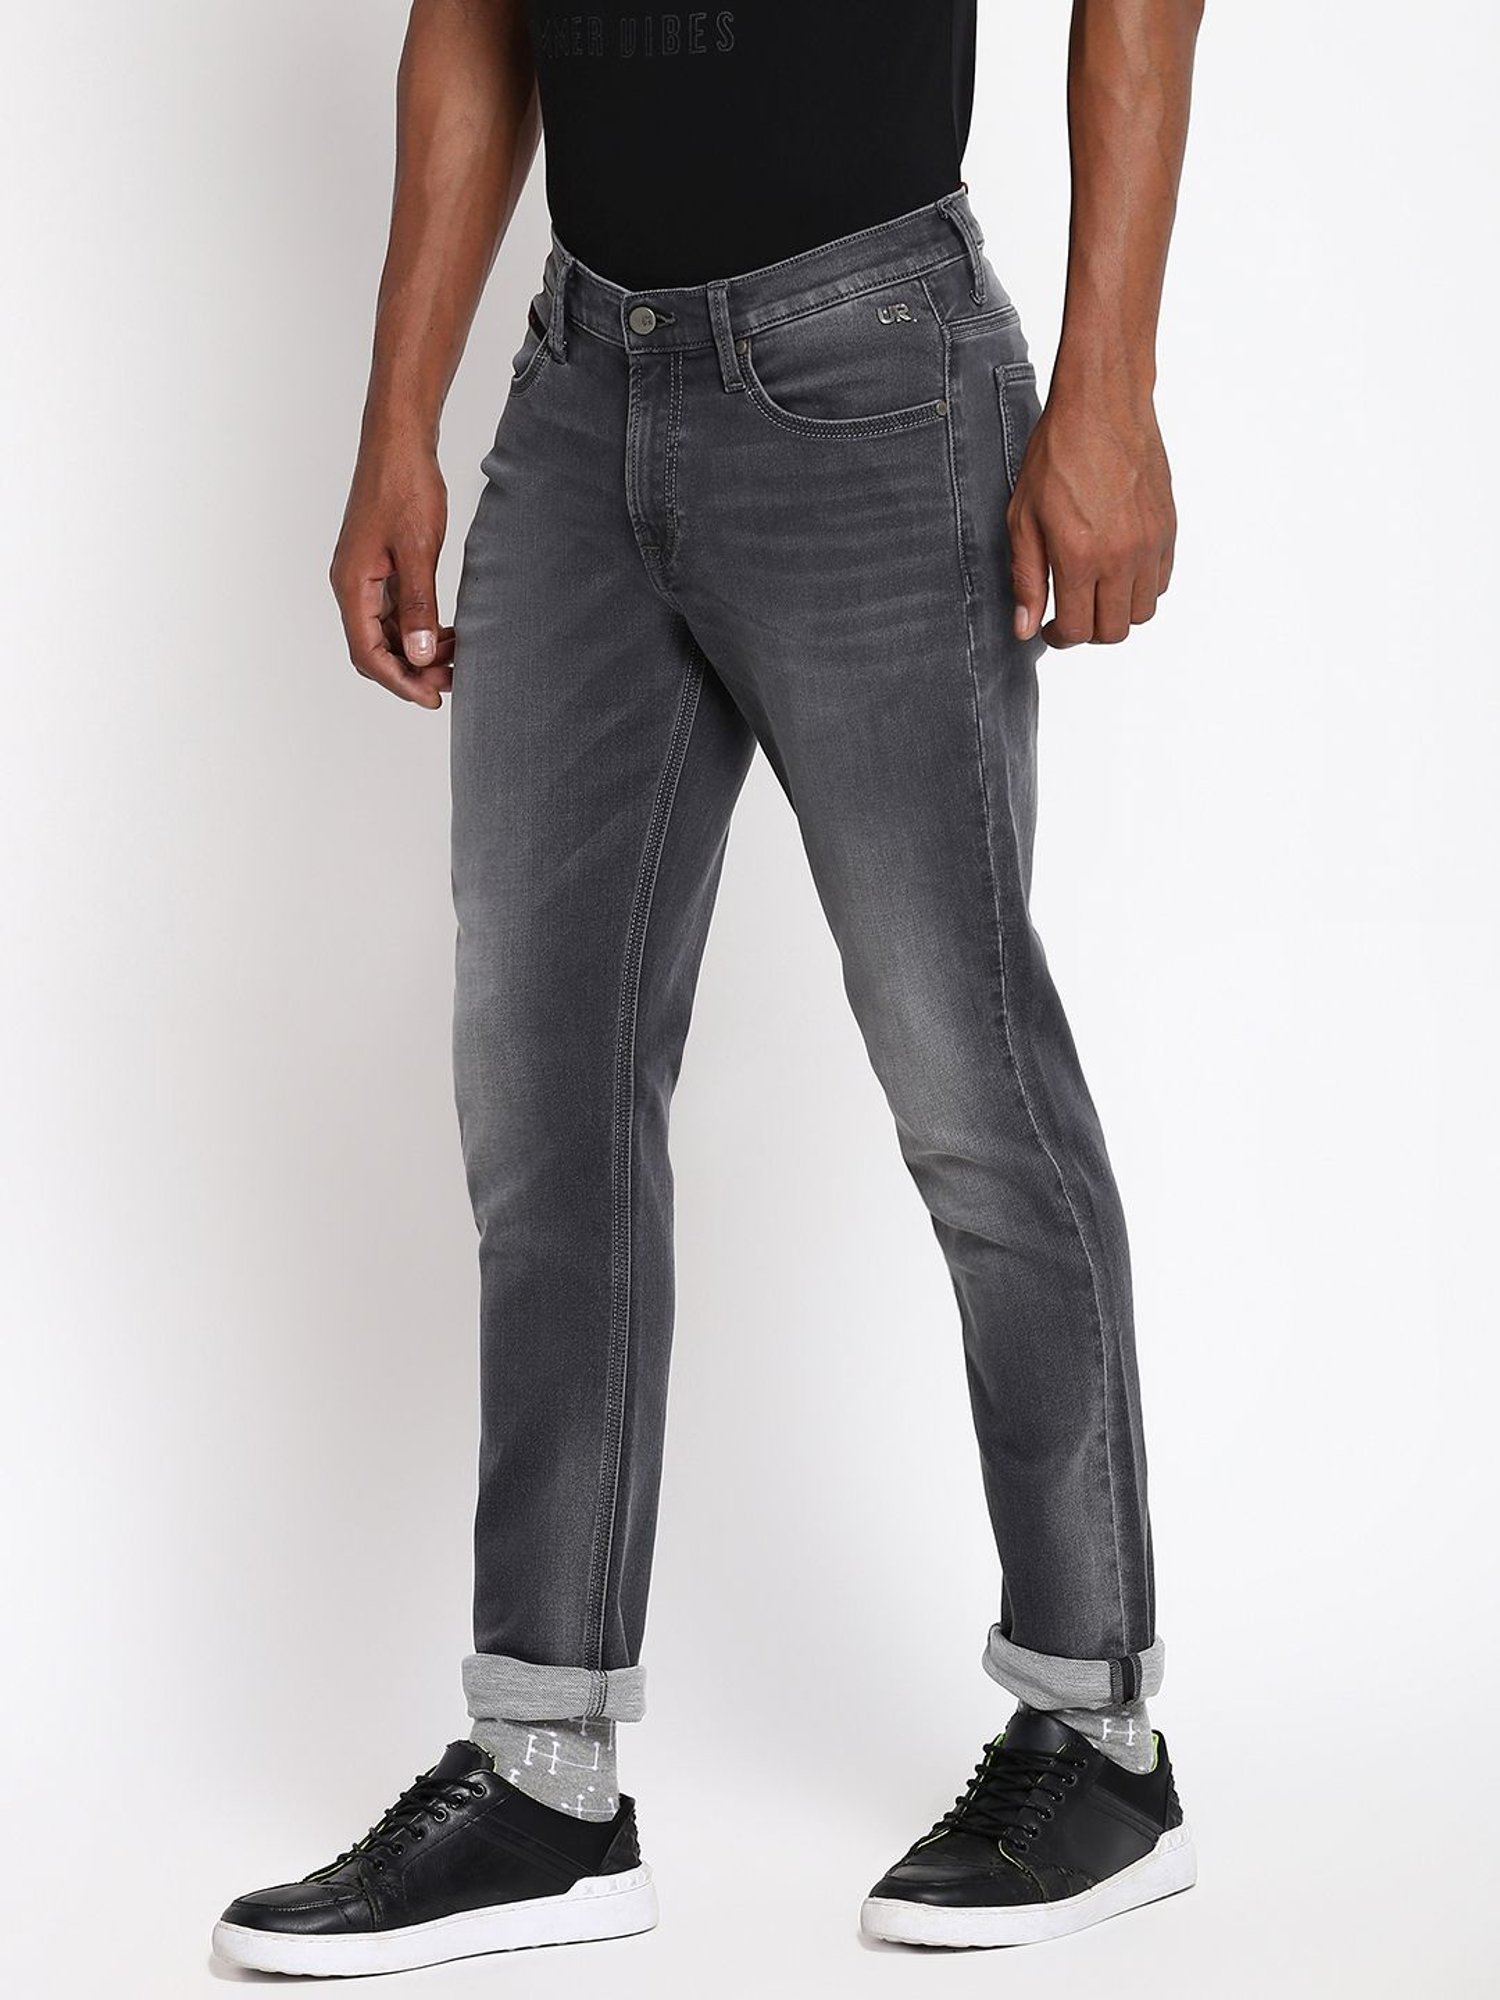 Barrel Leg High Jeans - Dark grey - Ladies | H&M IN